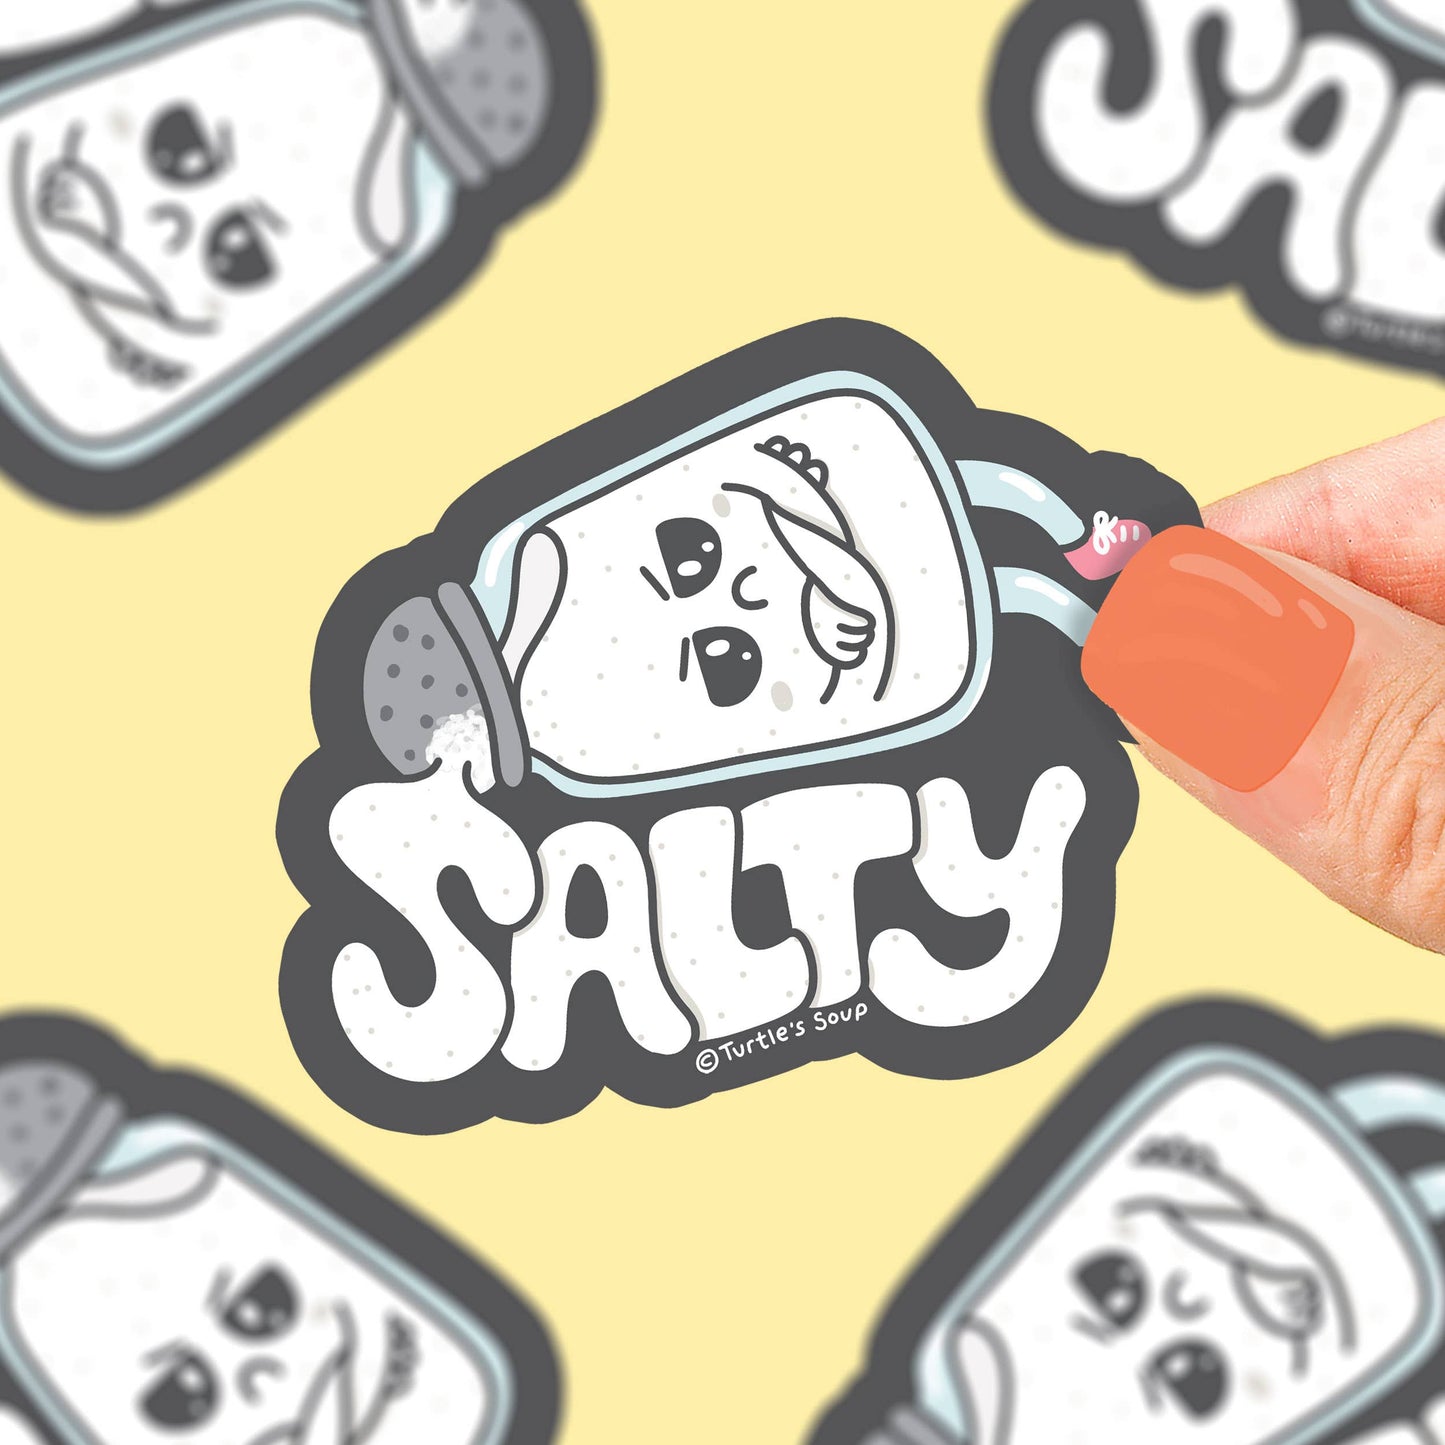 Turtle's Soup - Salty Salt Shaker Sarcasm Pun Holiday Gift Vinyl Sticker